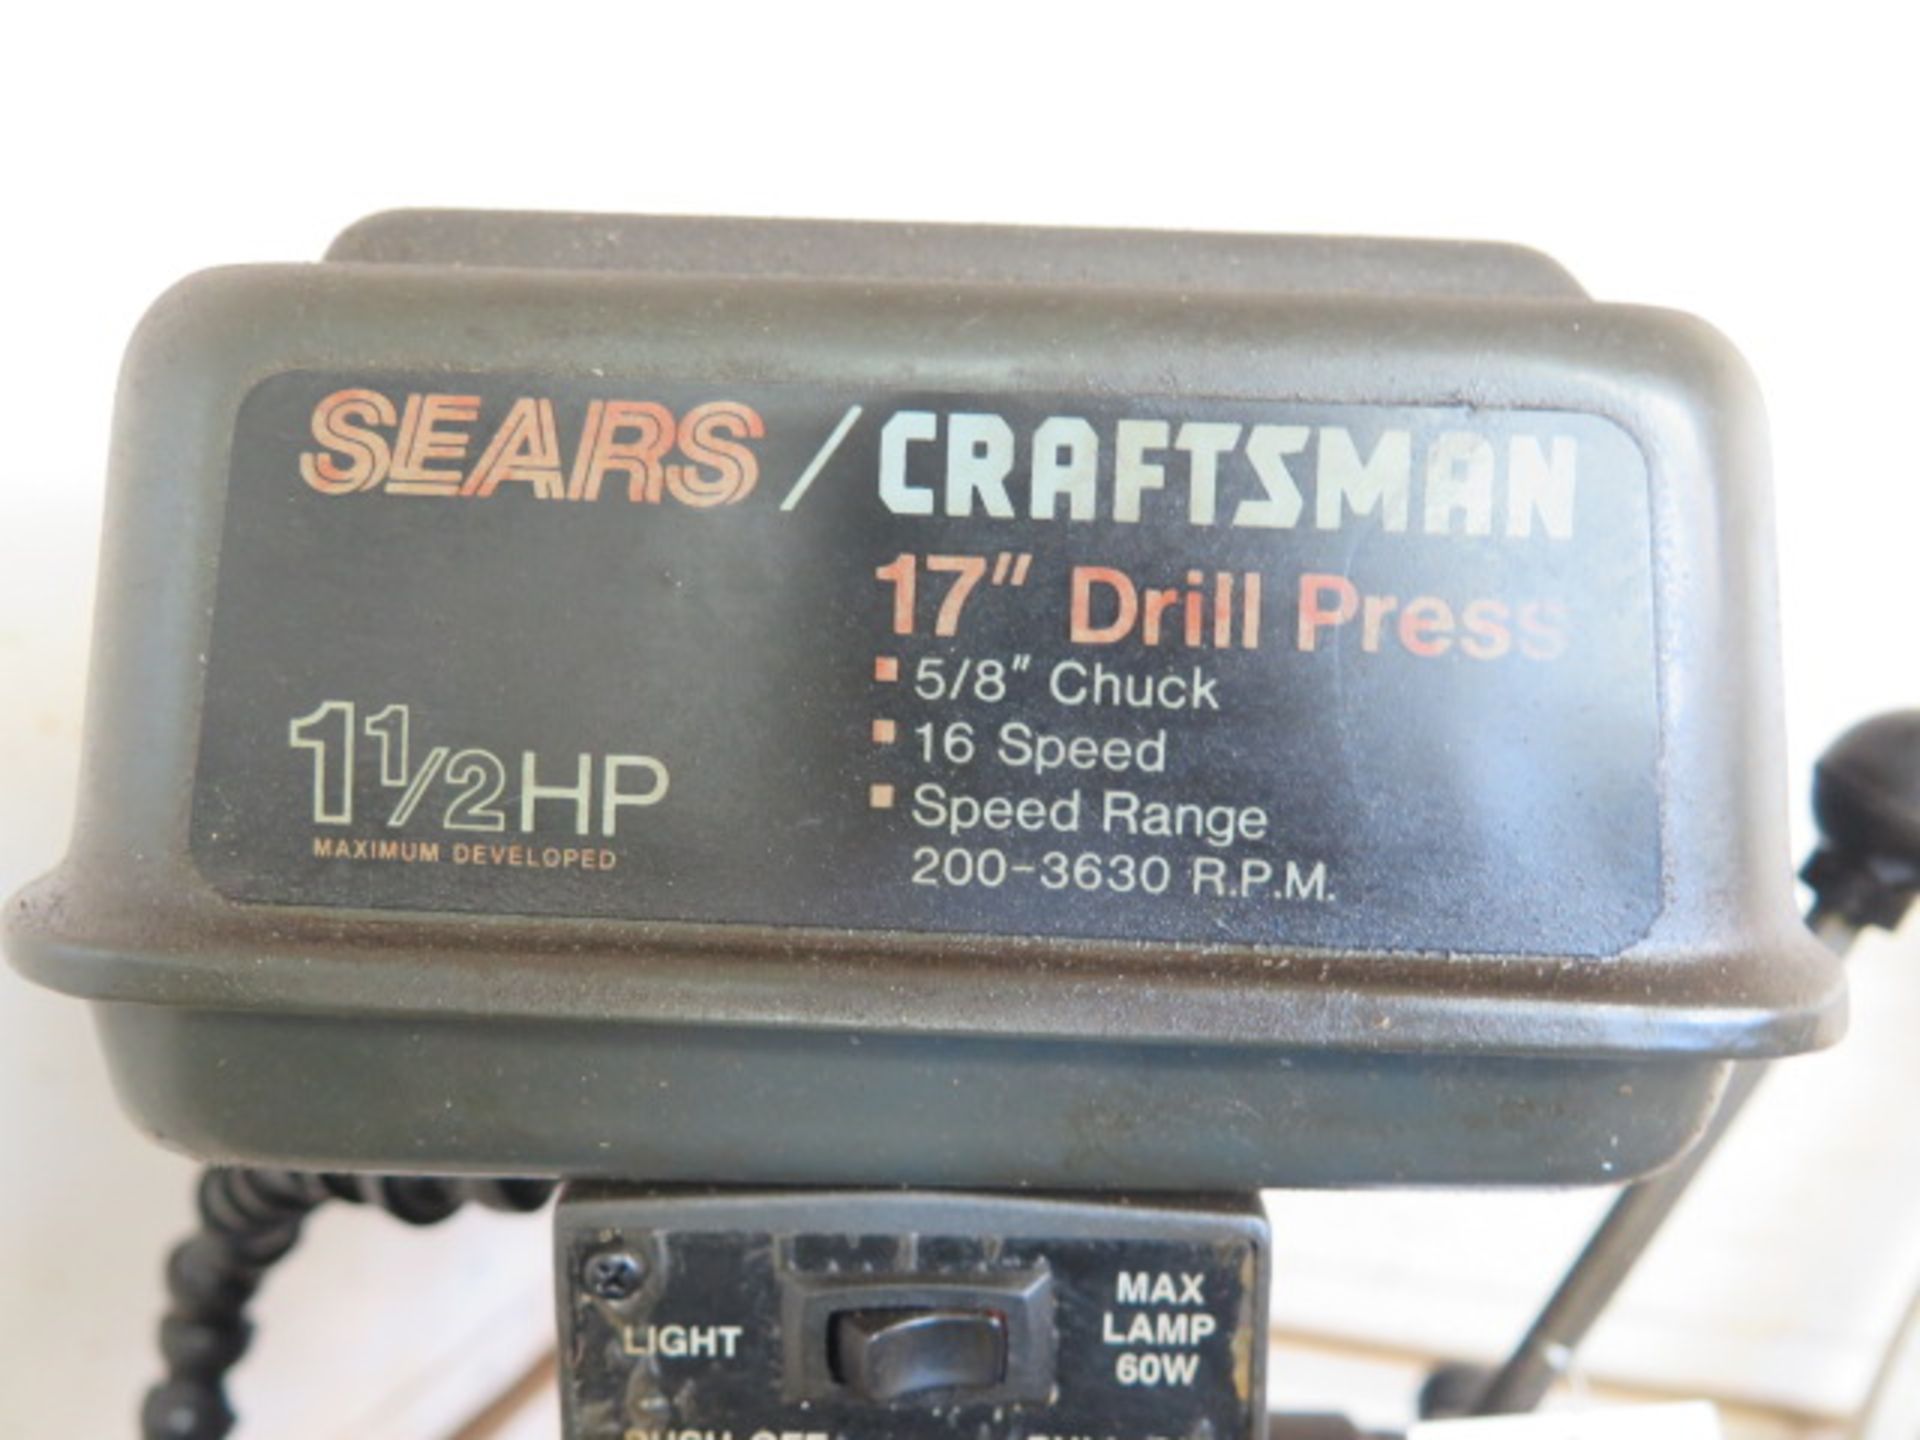 Sears/Craftsman 17” Pedestal Drill Press - Image 3 of 3